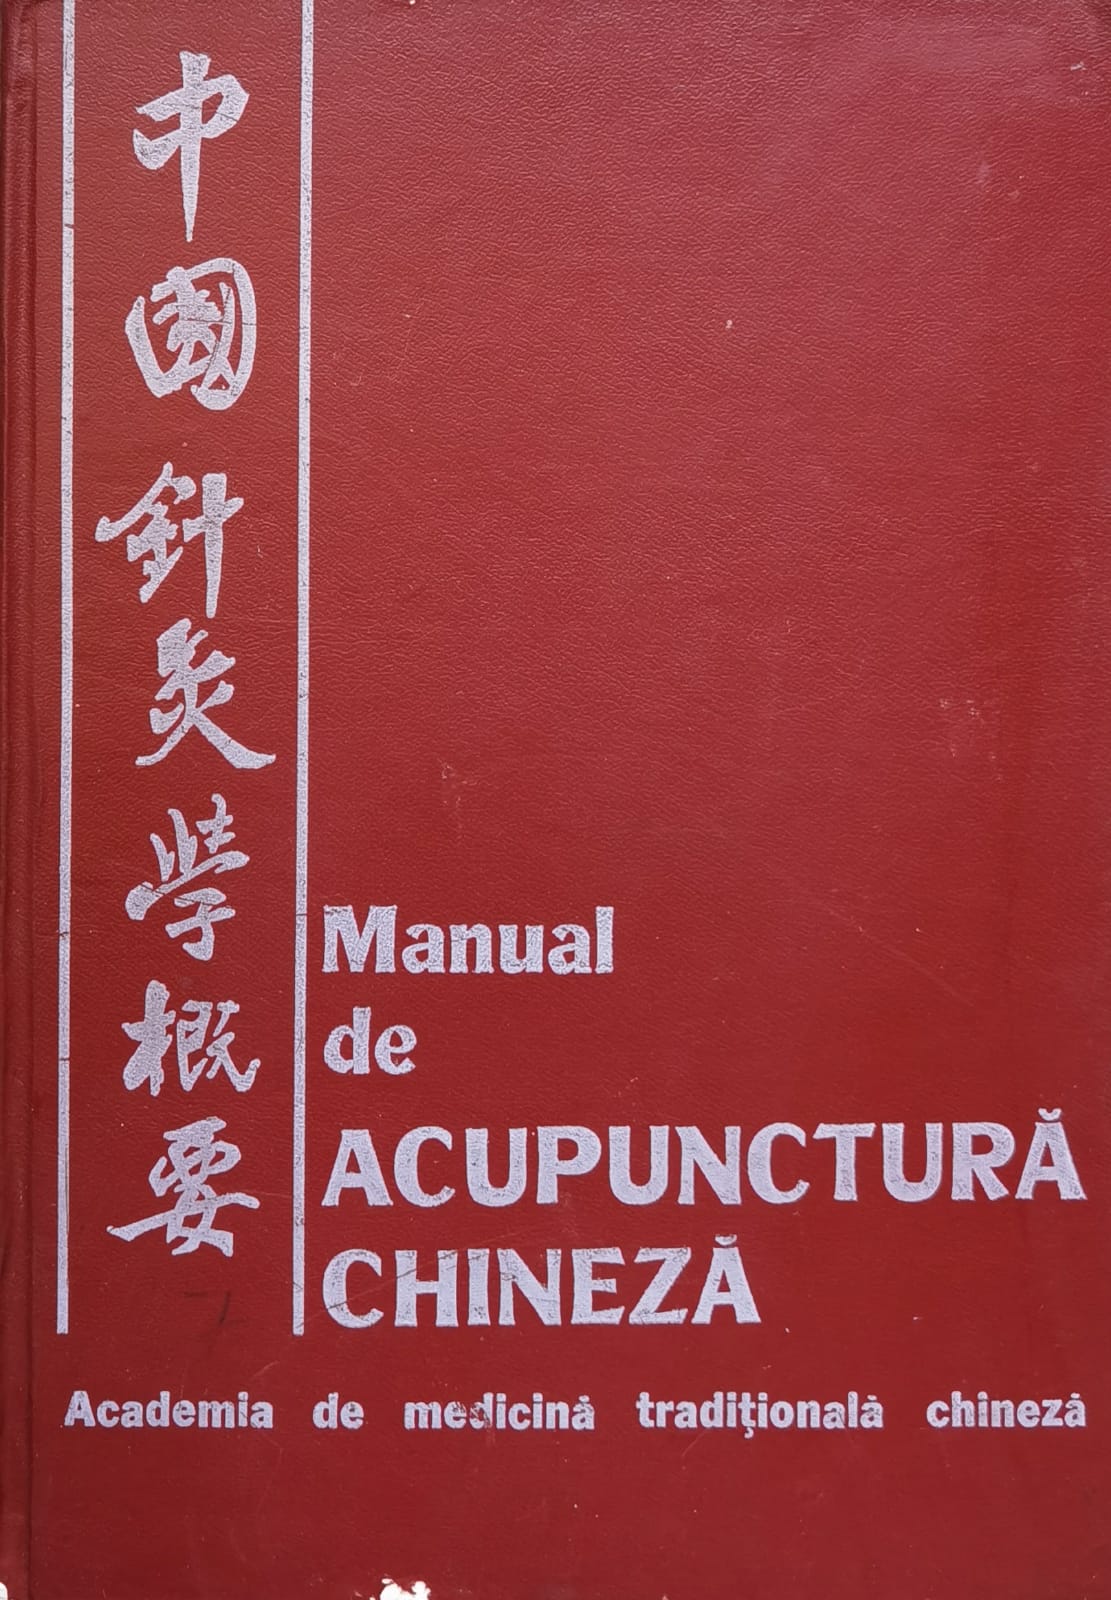 manual de acupunctura chineza                                                                        colectiv                                                                                            